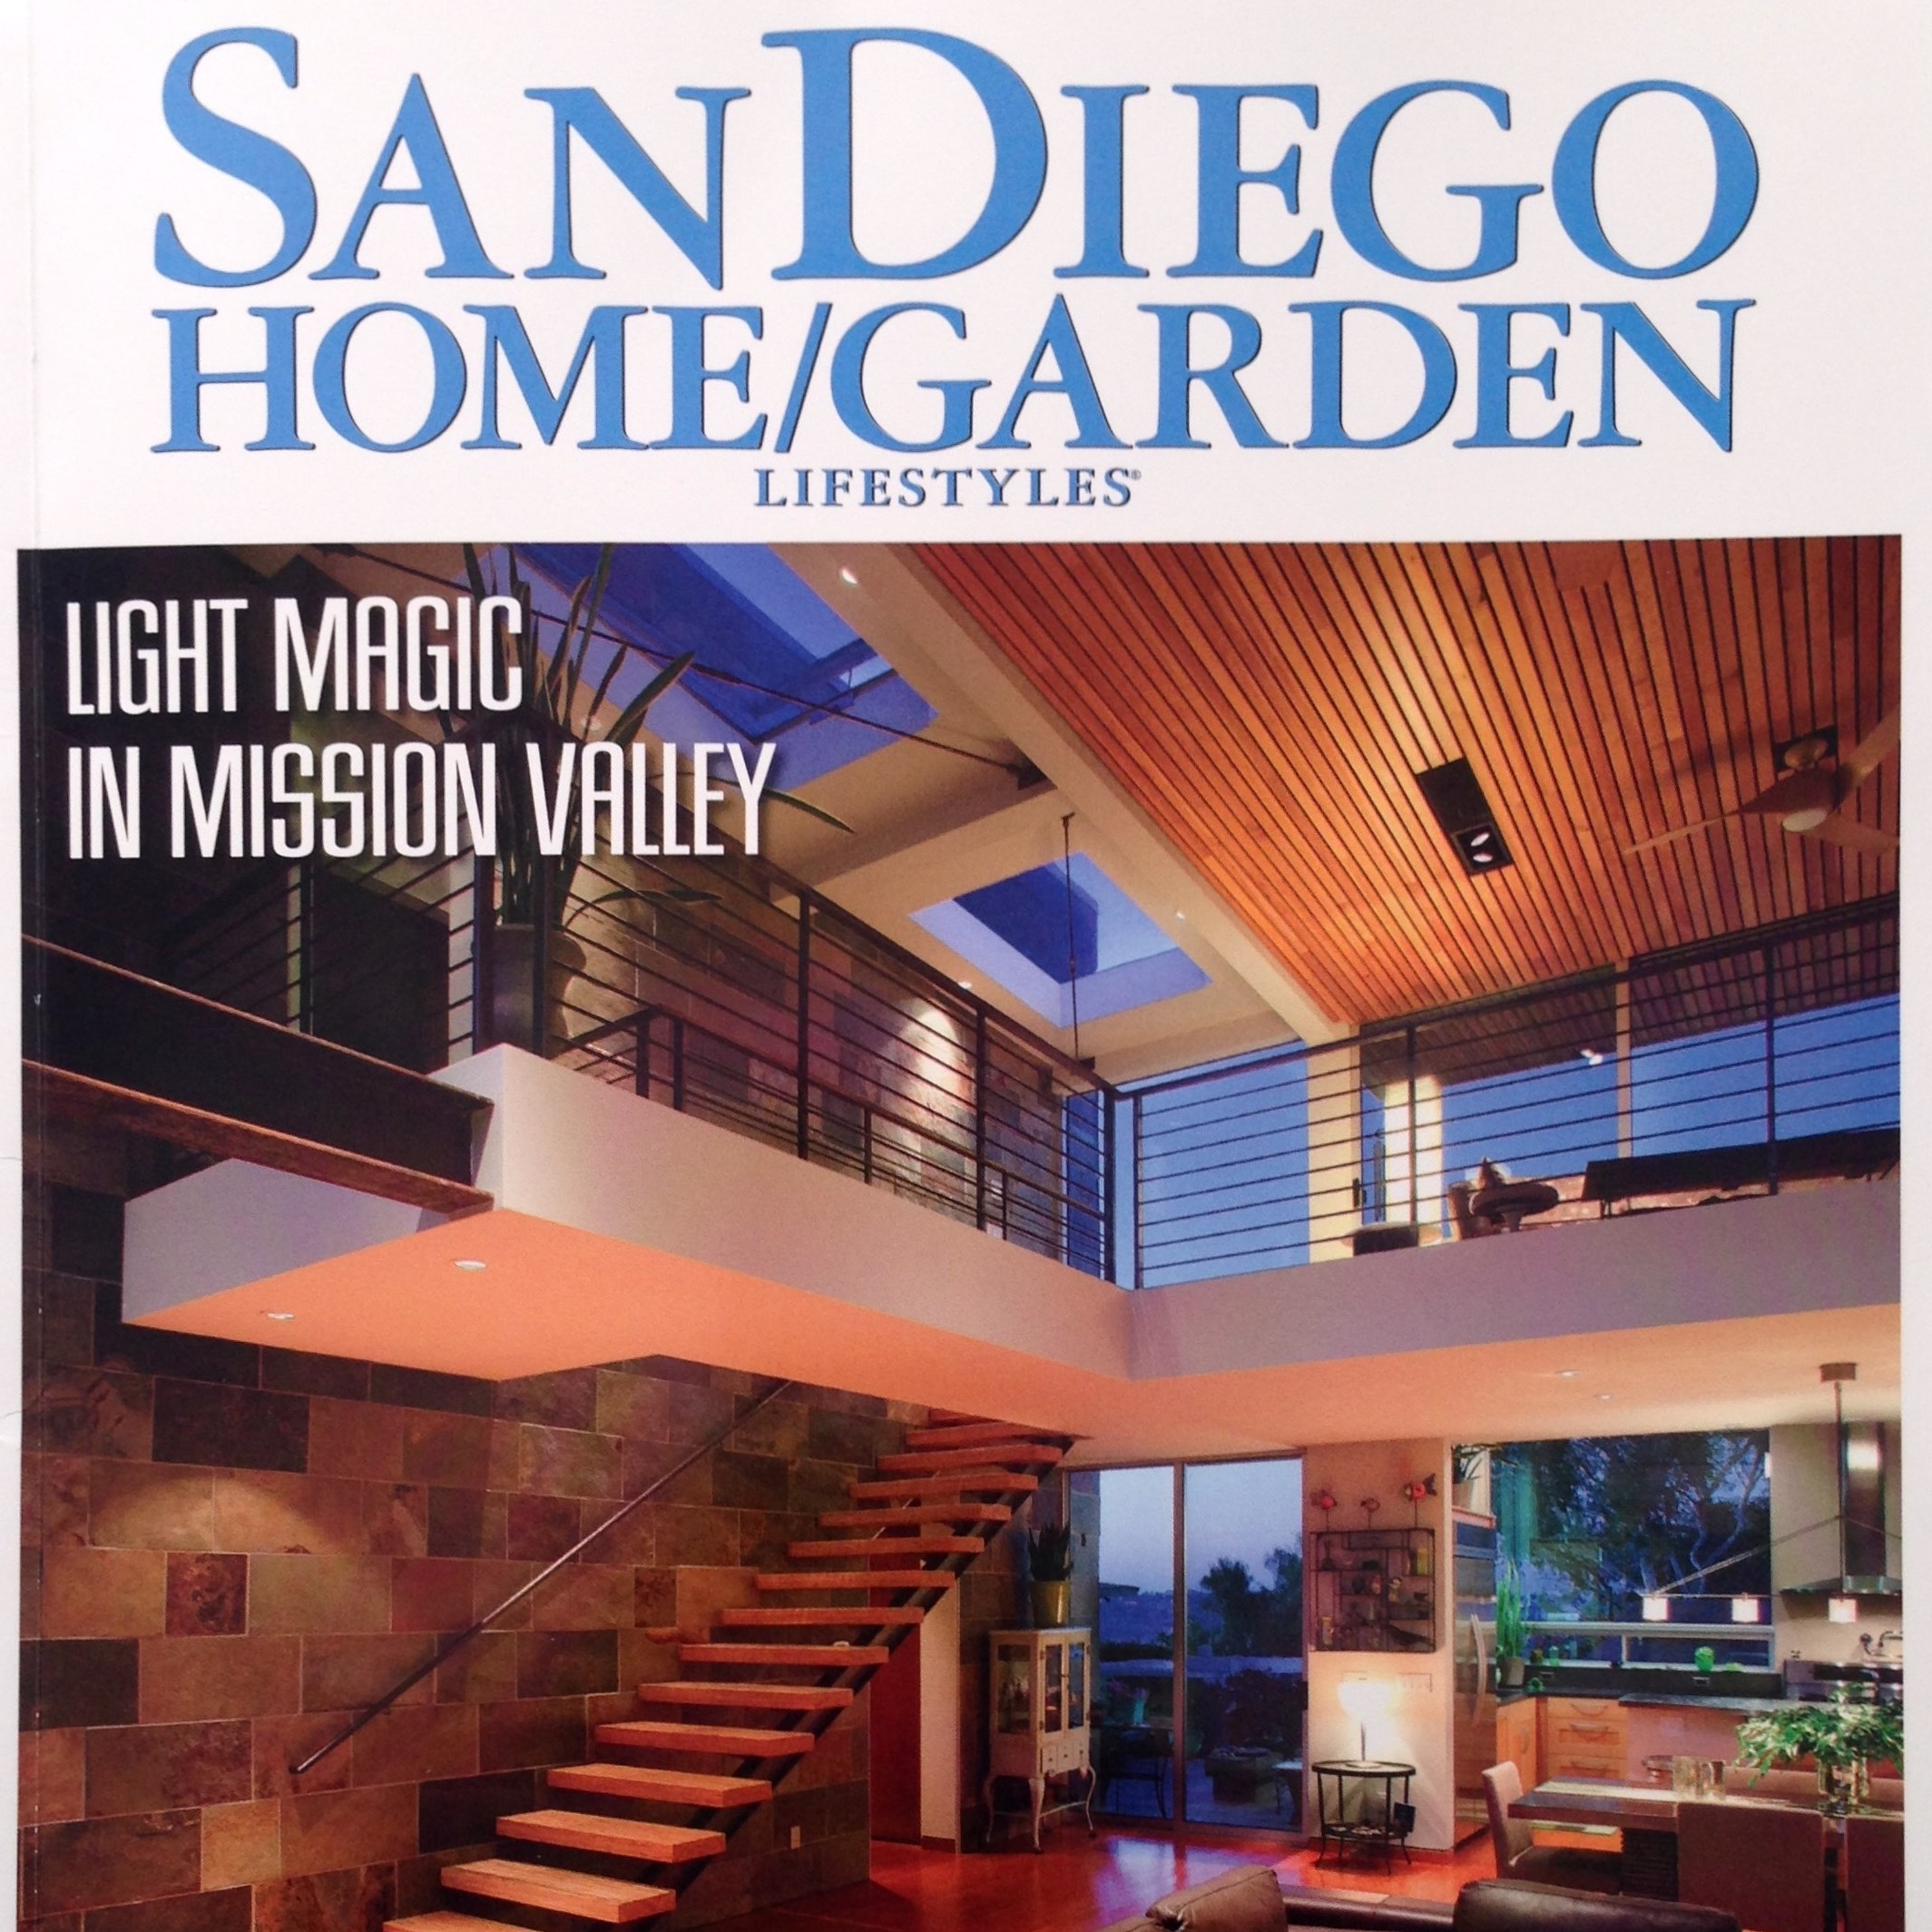  Published in  San Diego Home/Garden  - November 2013 